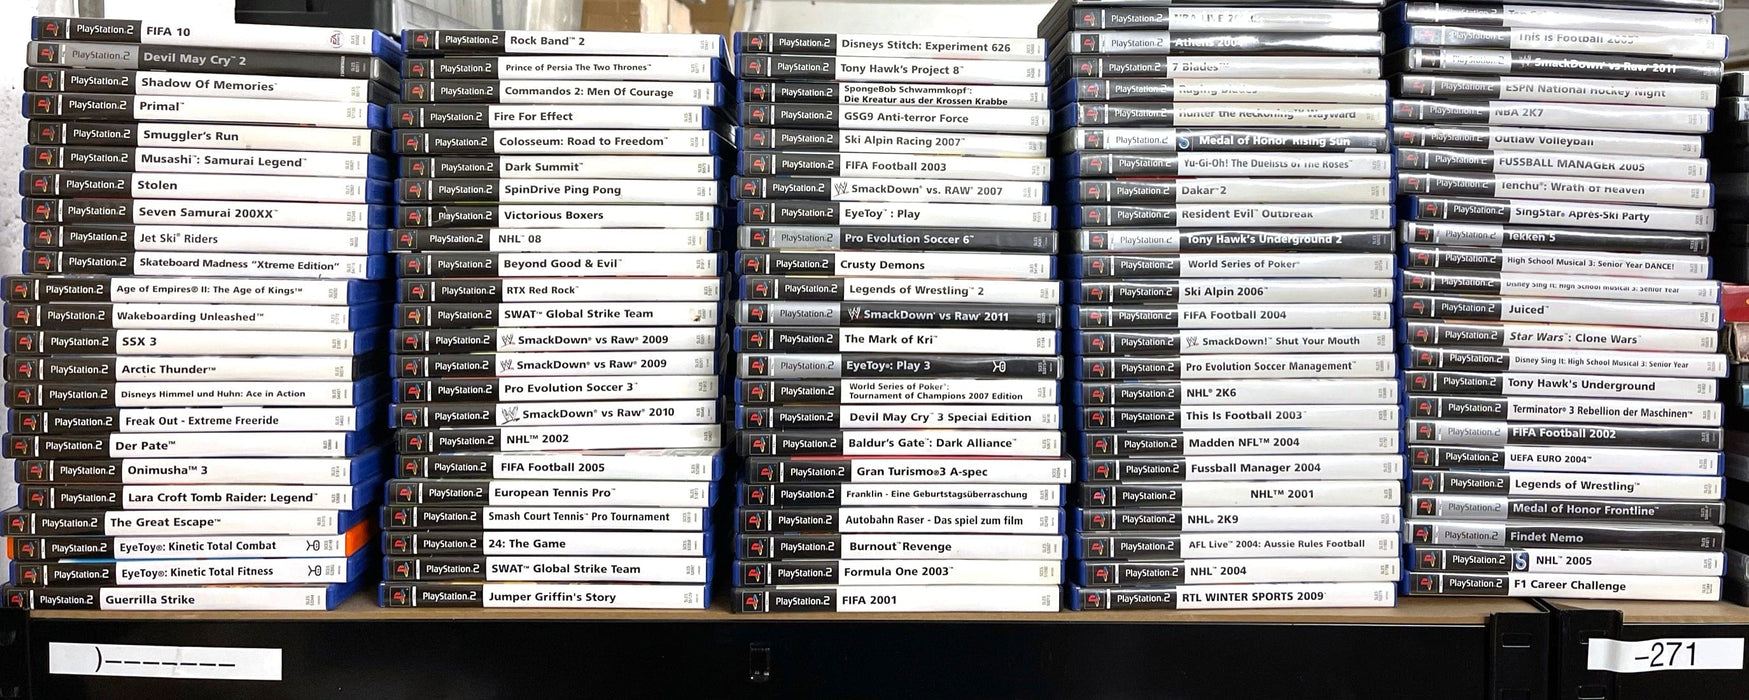 Glaciergames PlayStation 2 Game 24 - The Game PlayStation 2 (Nr.145)